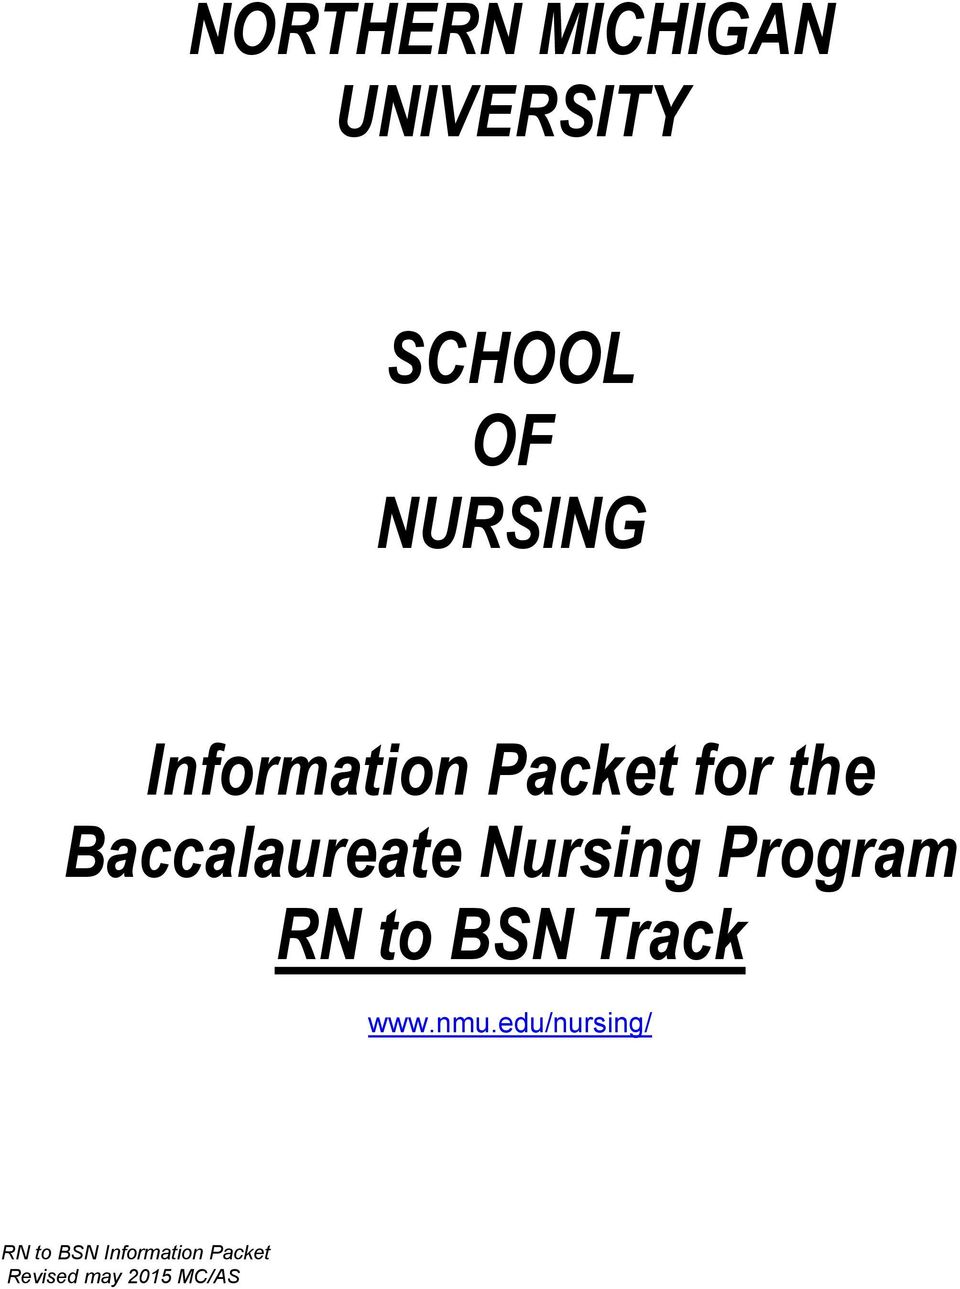 Baccalaureate Nursing Program RN to BSN